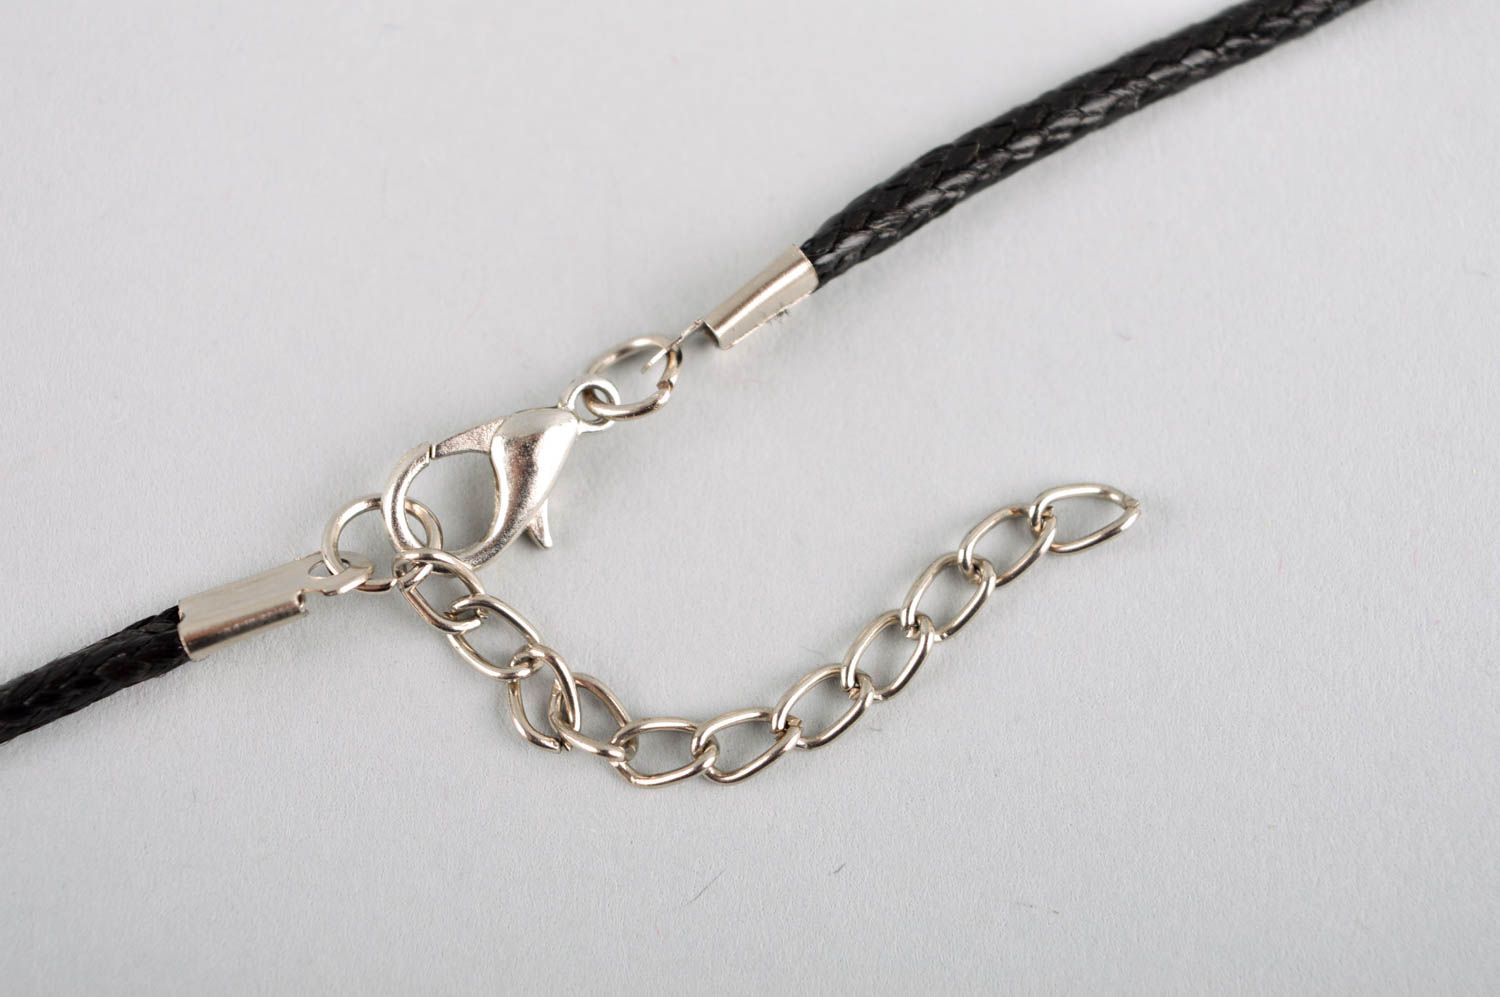 Handmade cord pendant with natural stone stylish jewelry handmade accessories  photo 3